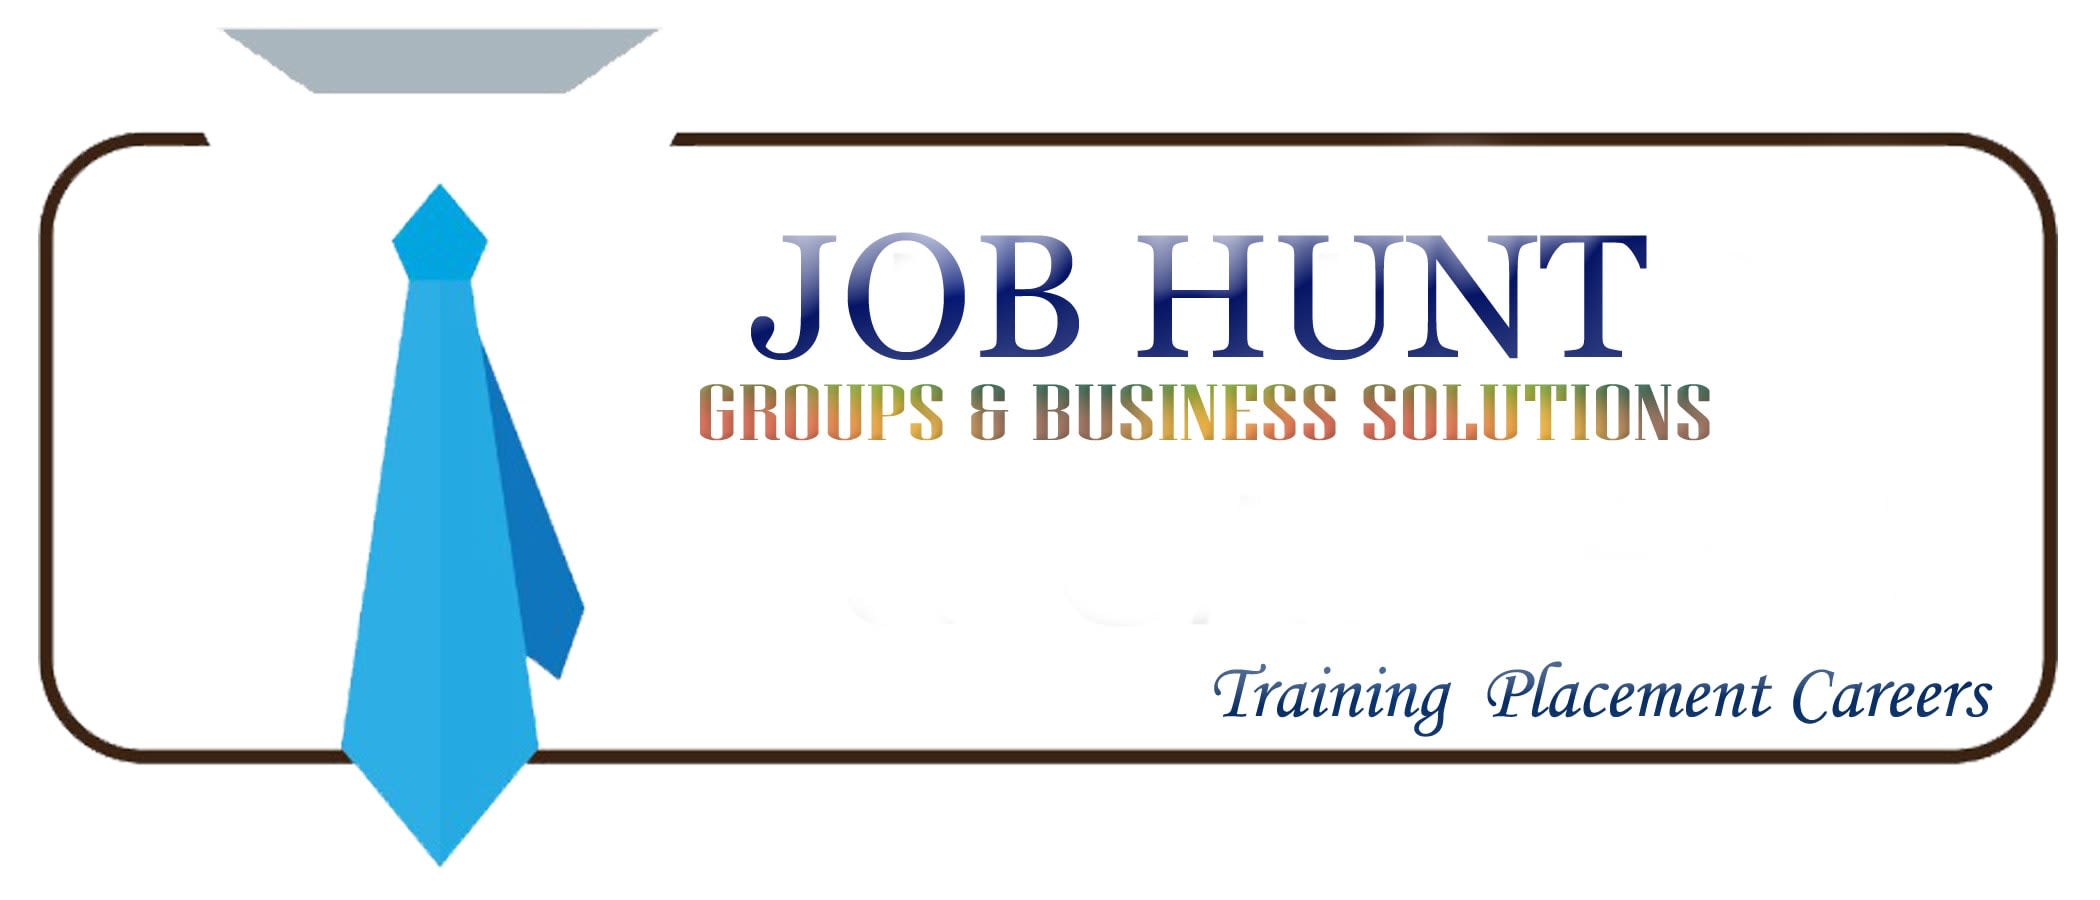 Job Hunt Groups